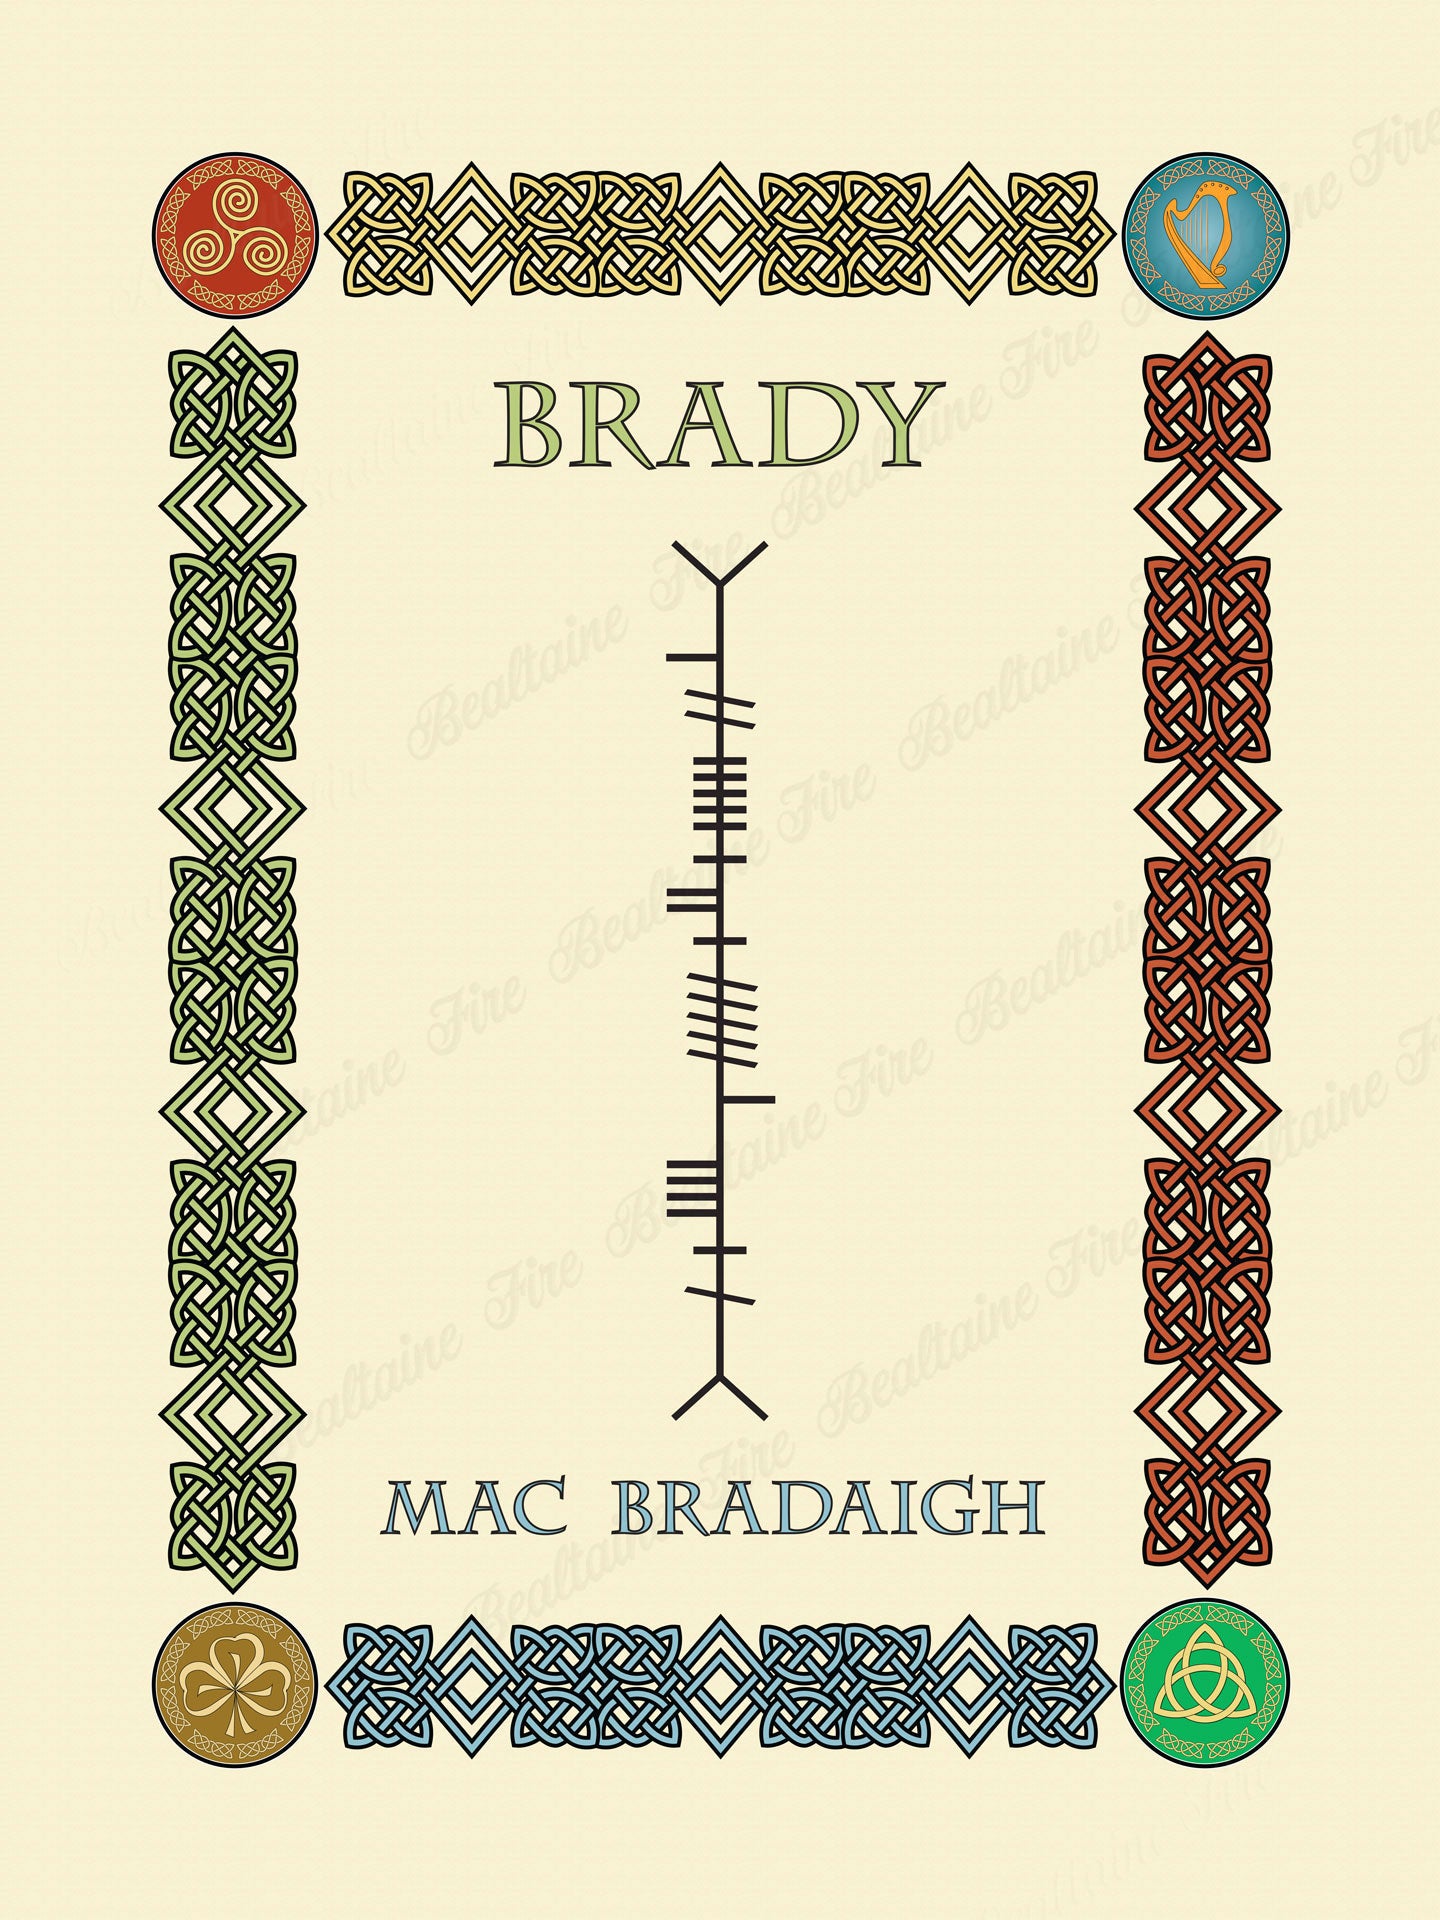 Brady in Old Irish and Ogham - Premium luster unframed print